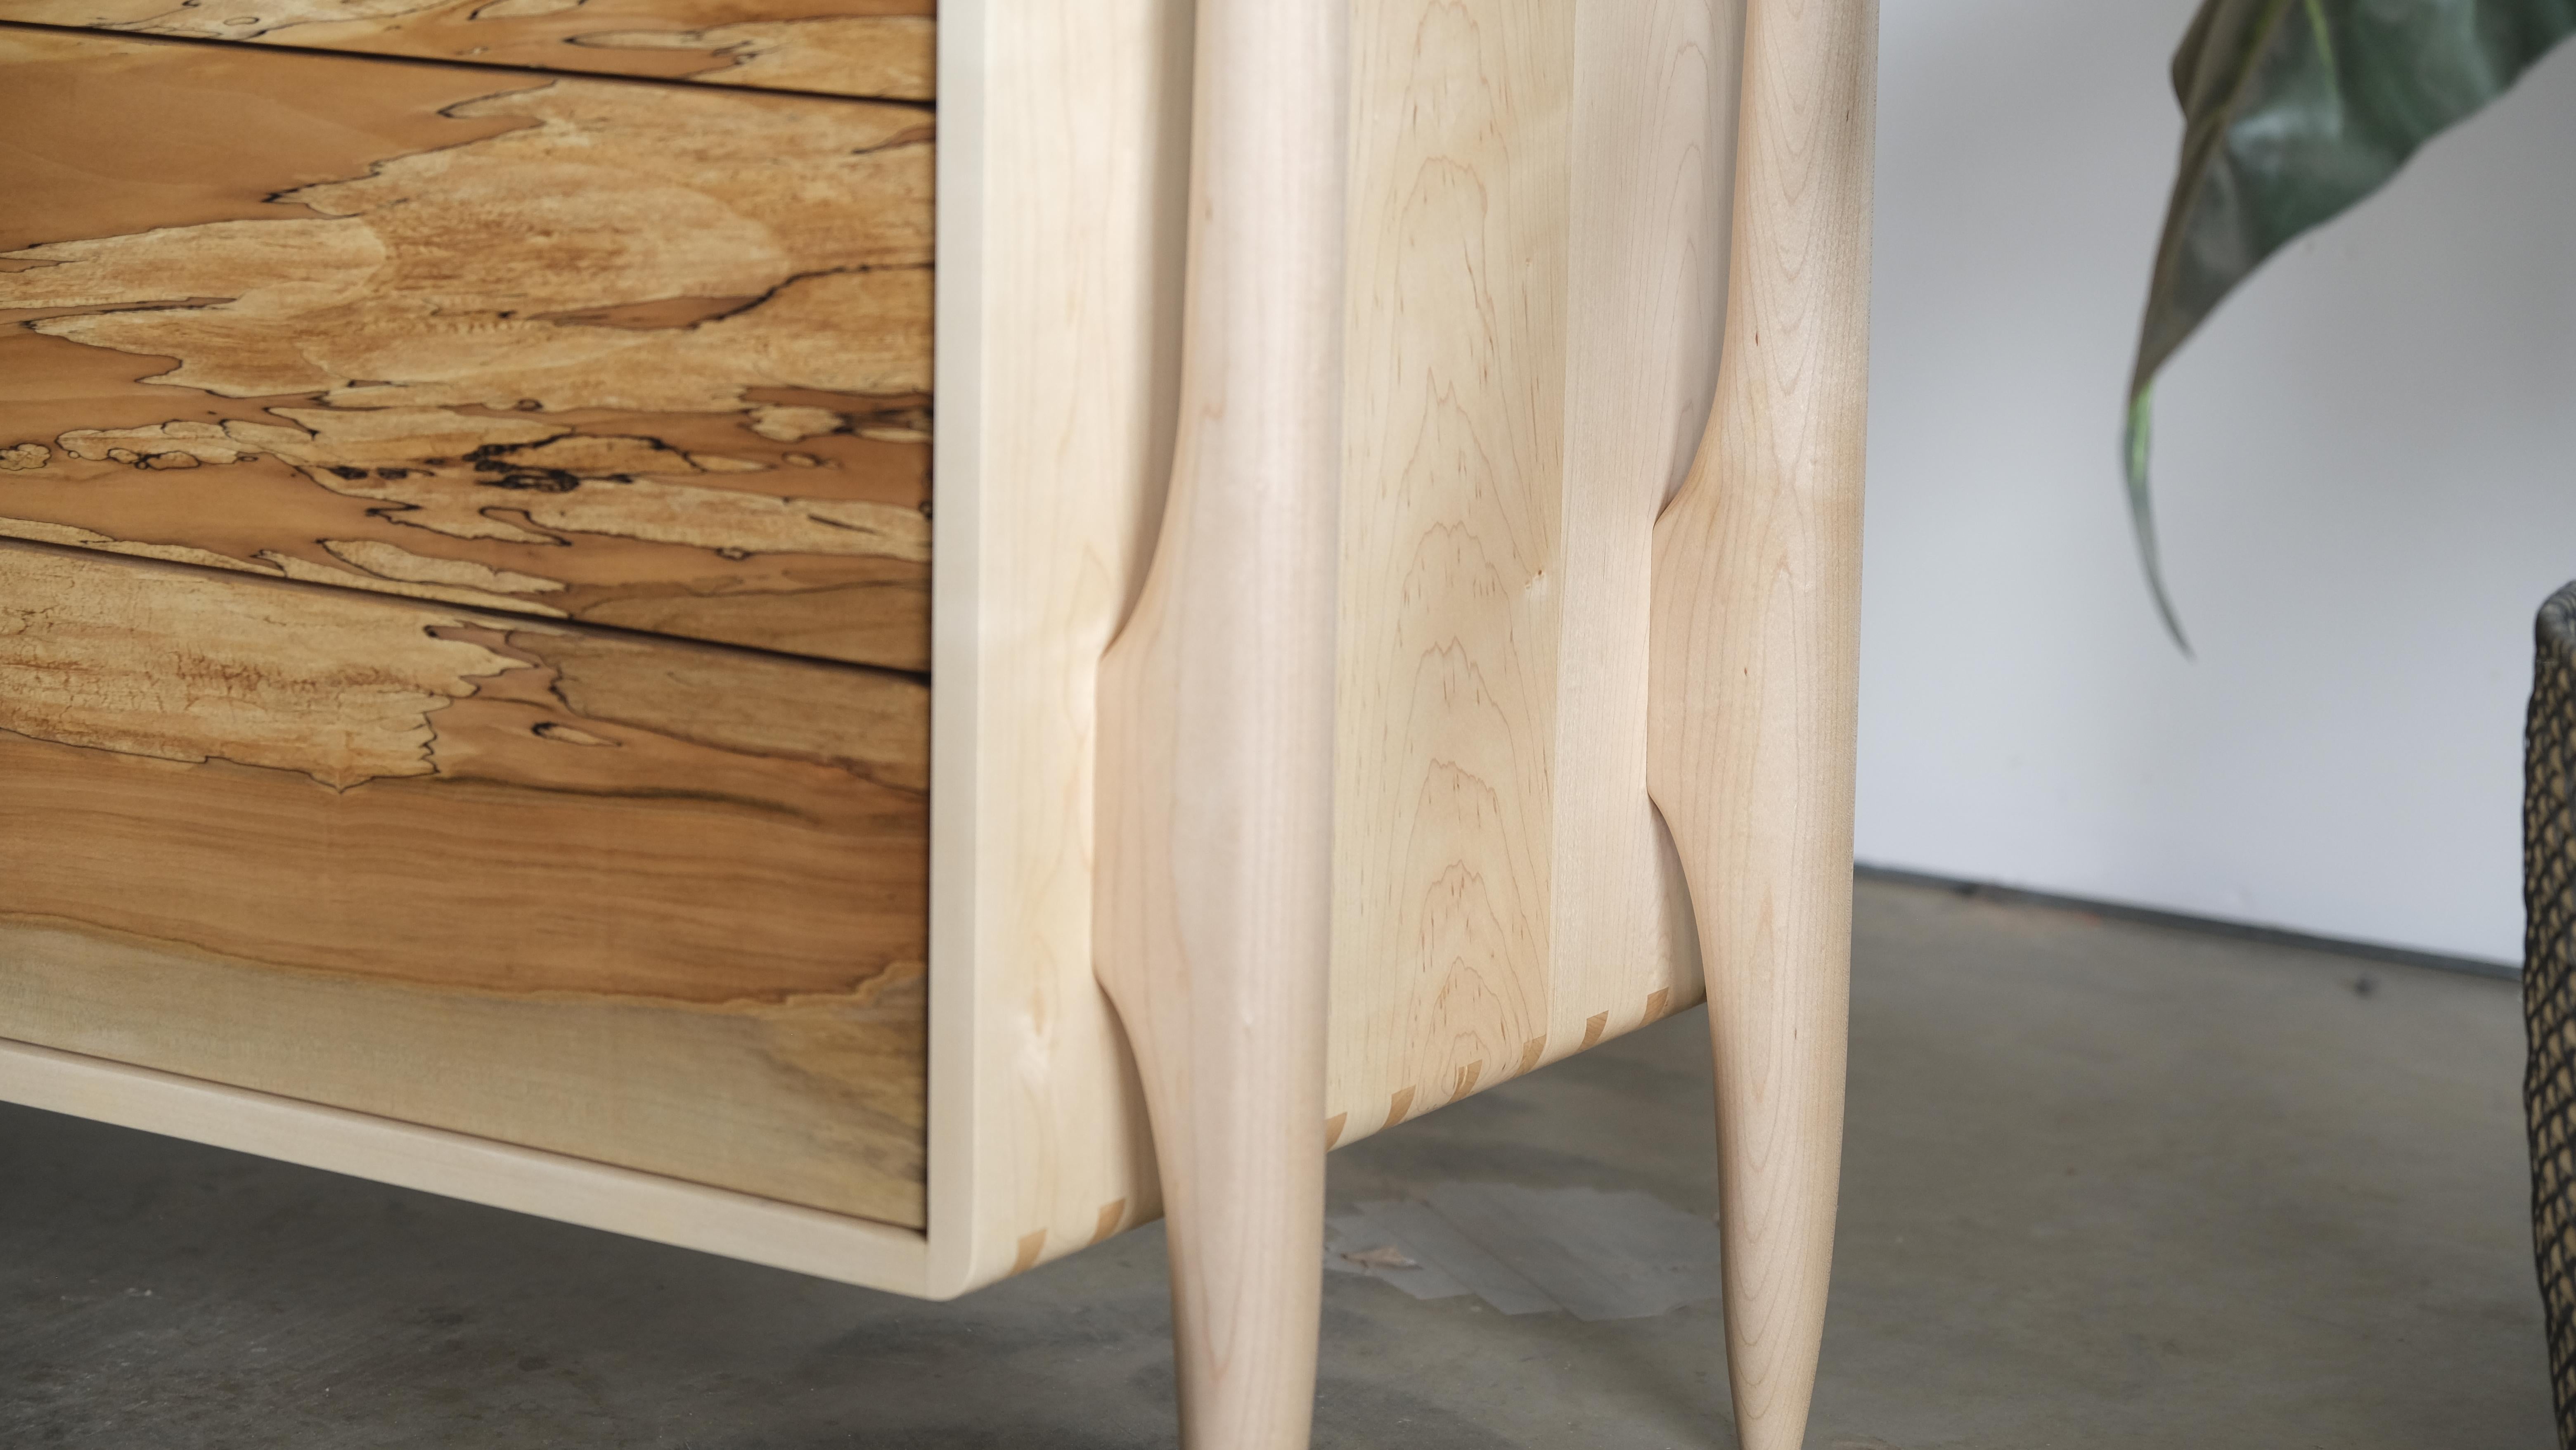 solid wood mid century modern dresser